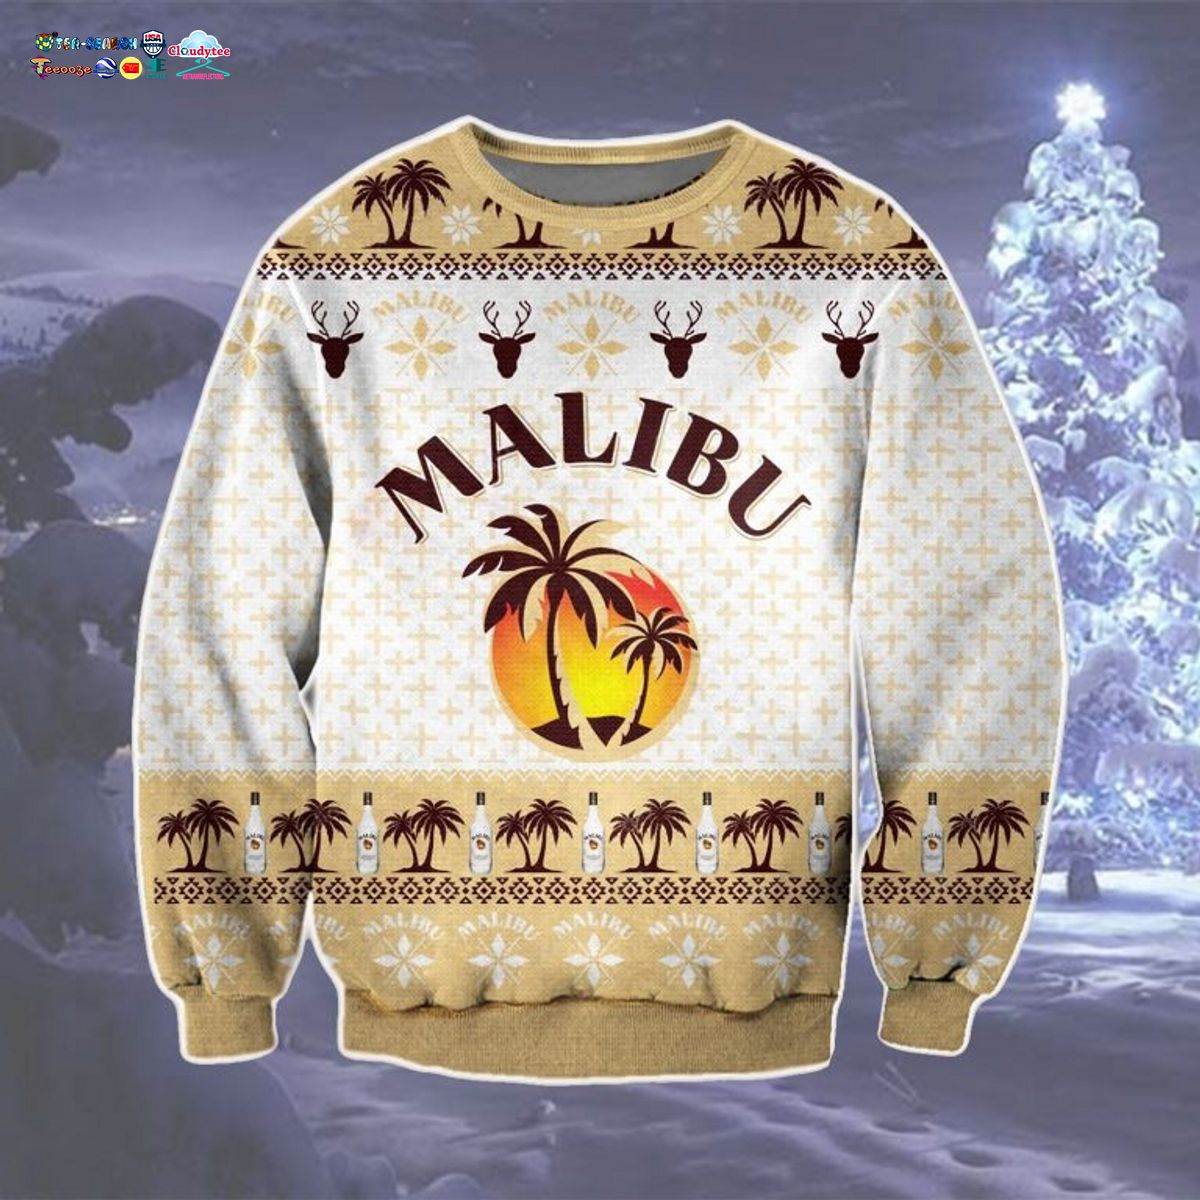 Malibu Ugly Christmas Sweater